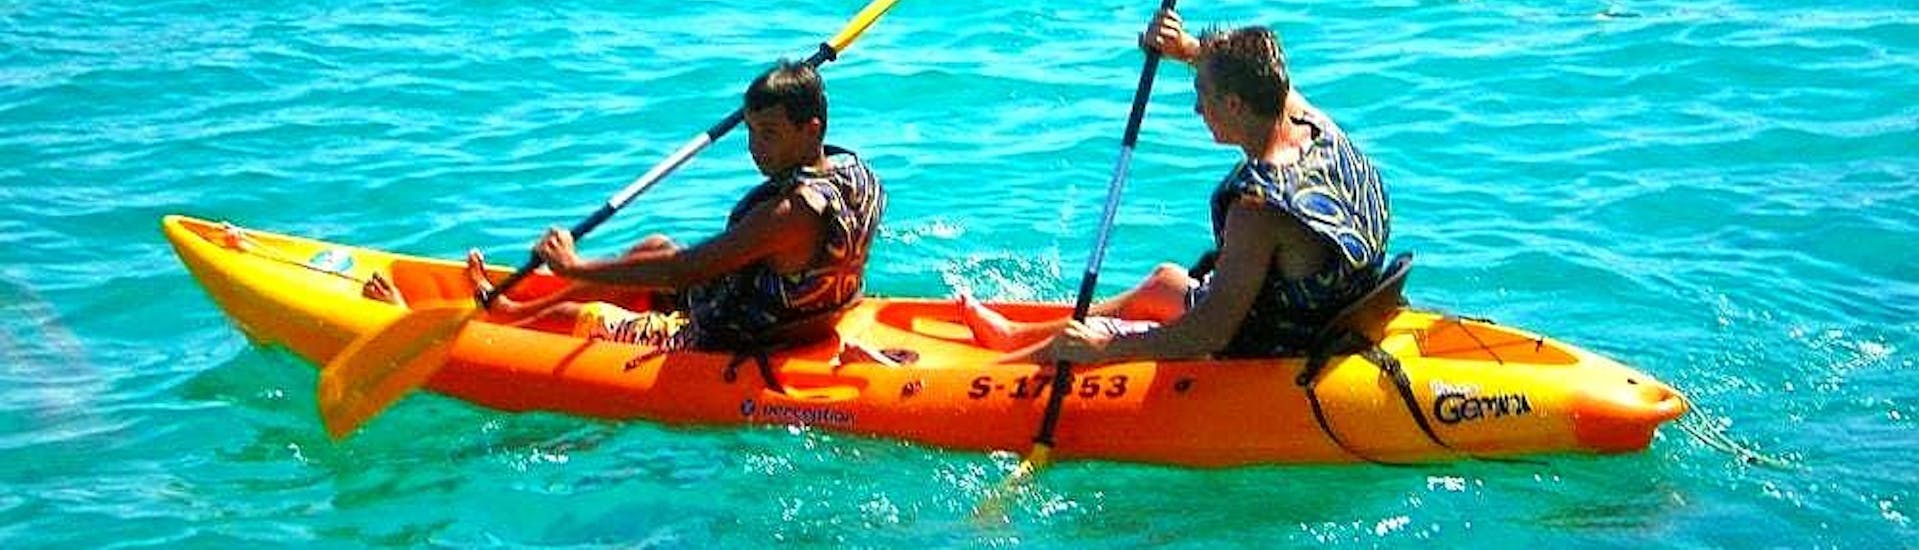 Kayak y piragua fácil en Qala - Blue Lagoon Malta.